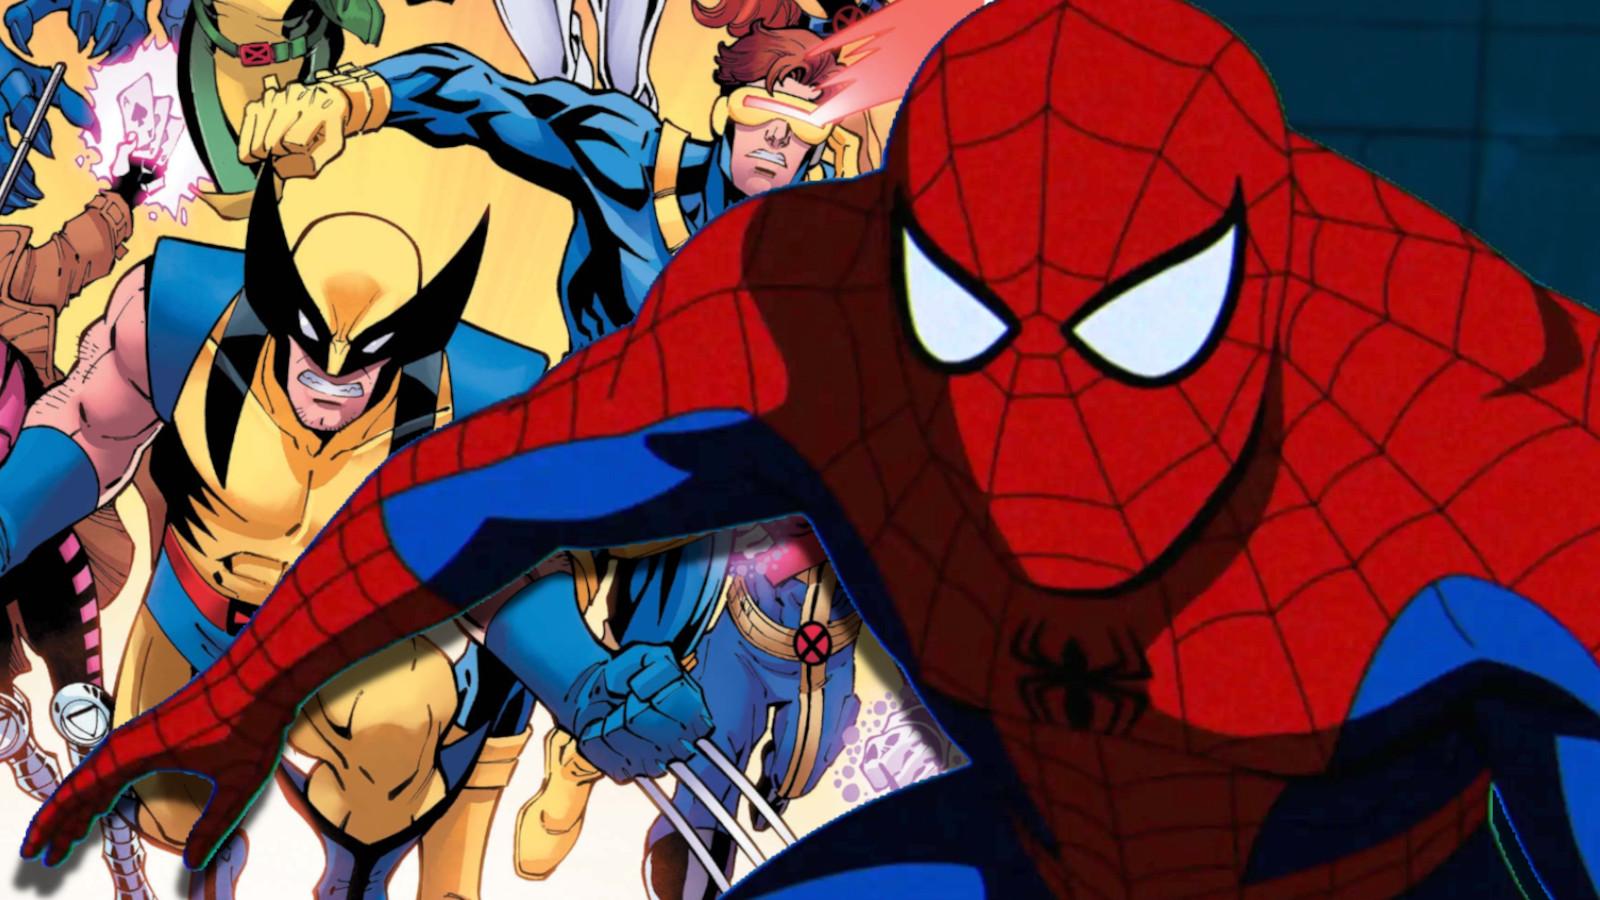 X-Men '97 and Spider-Man